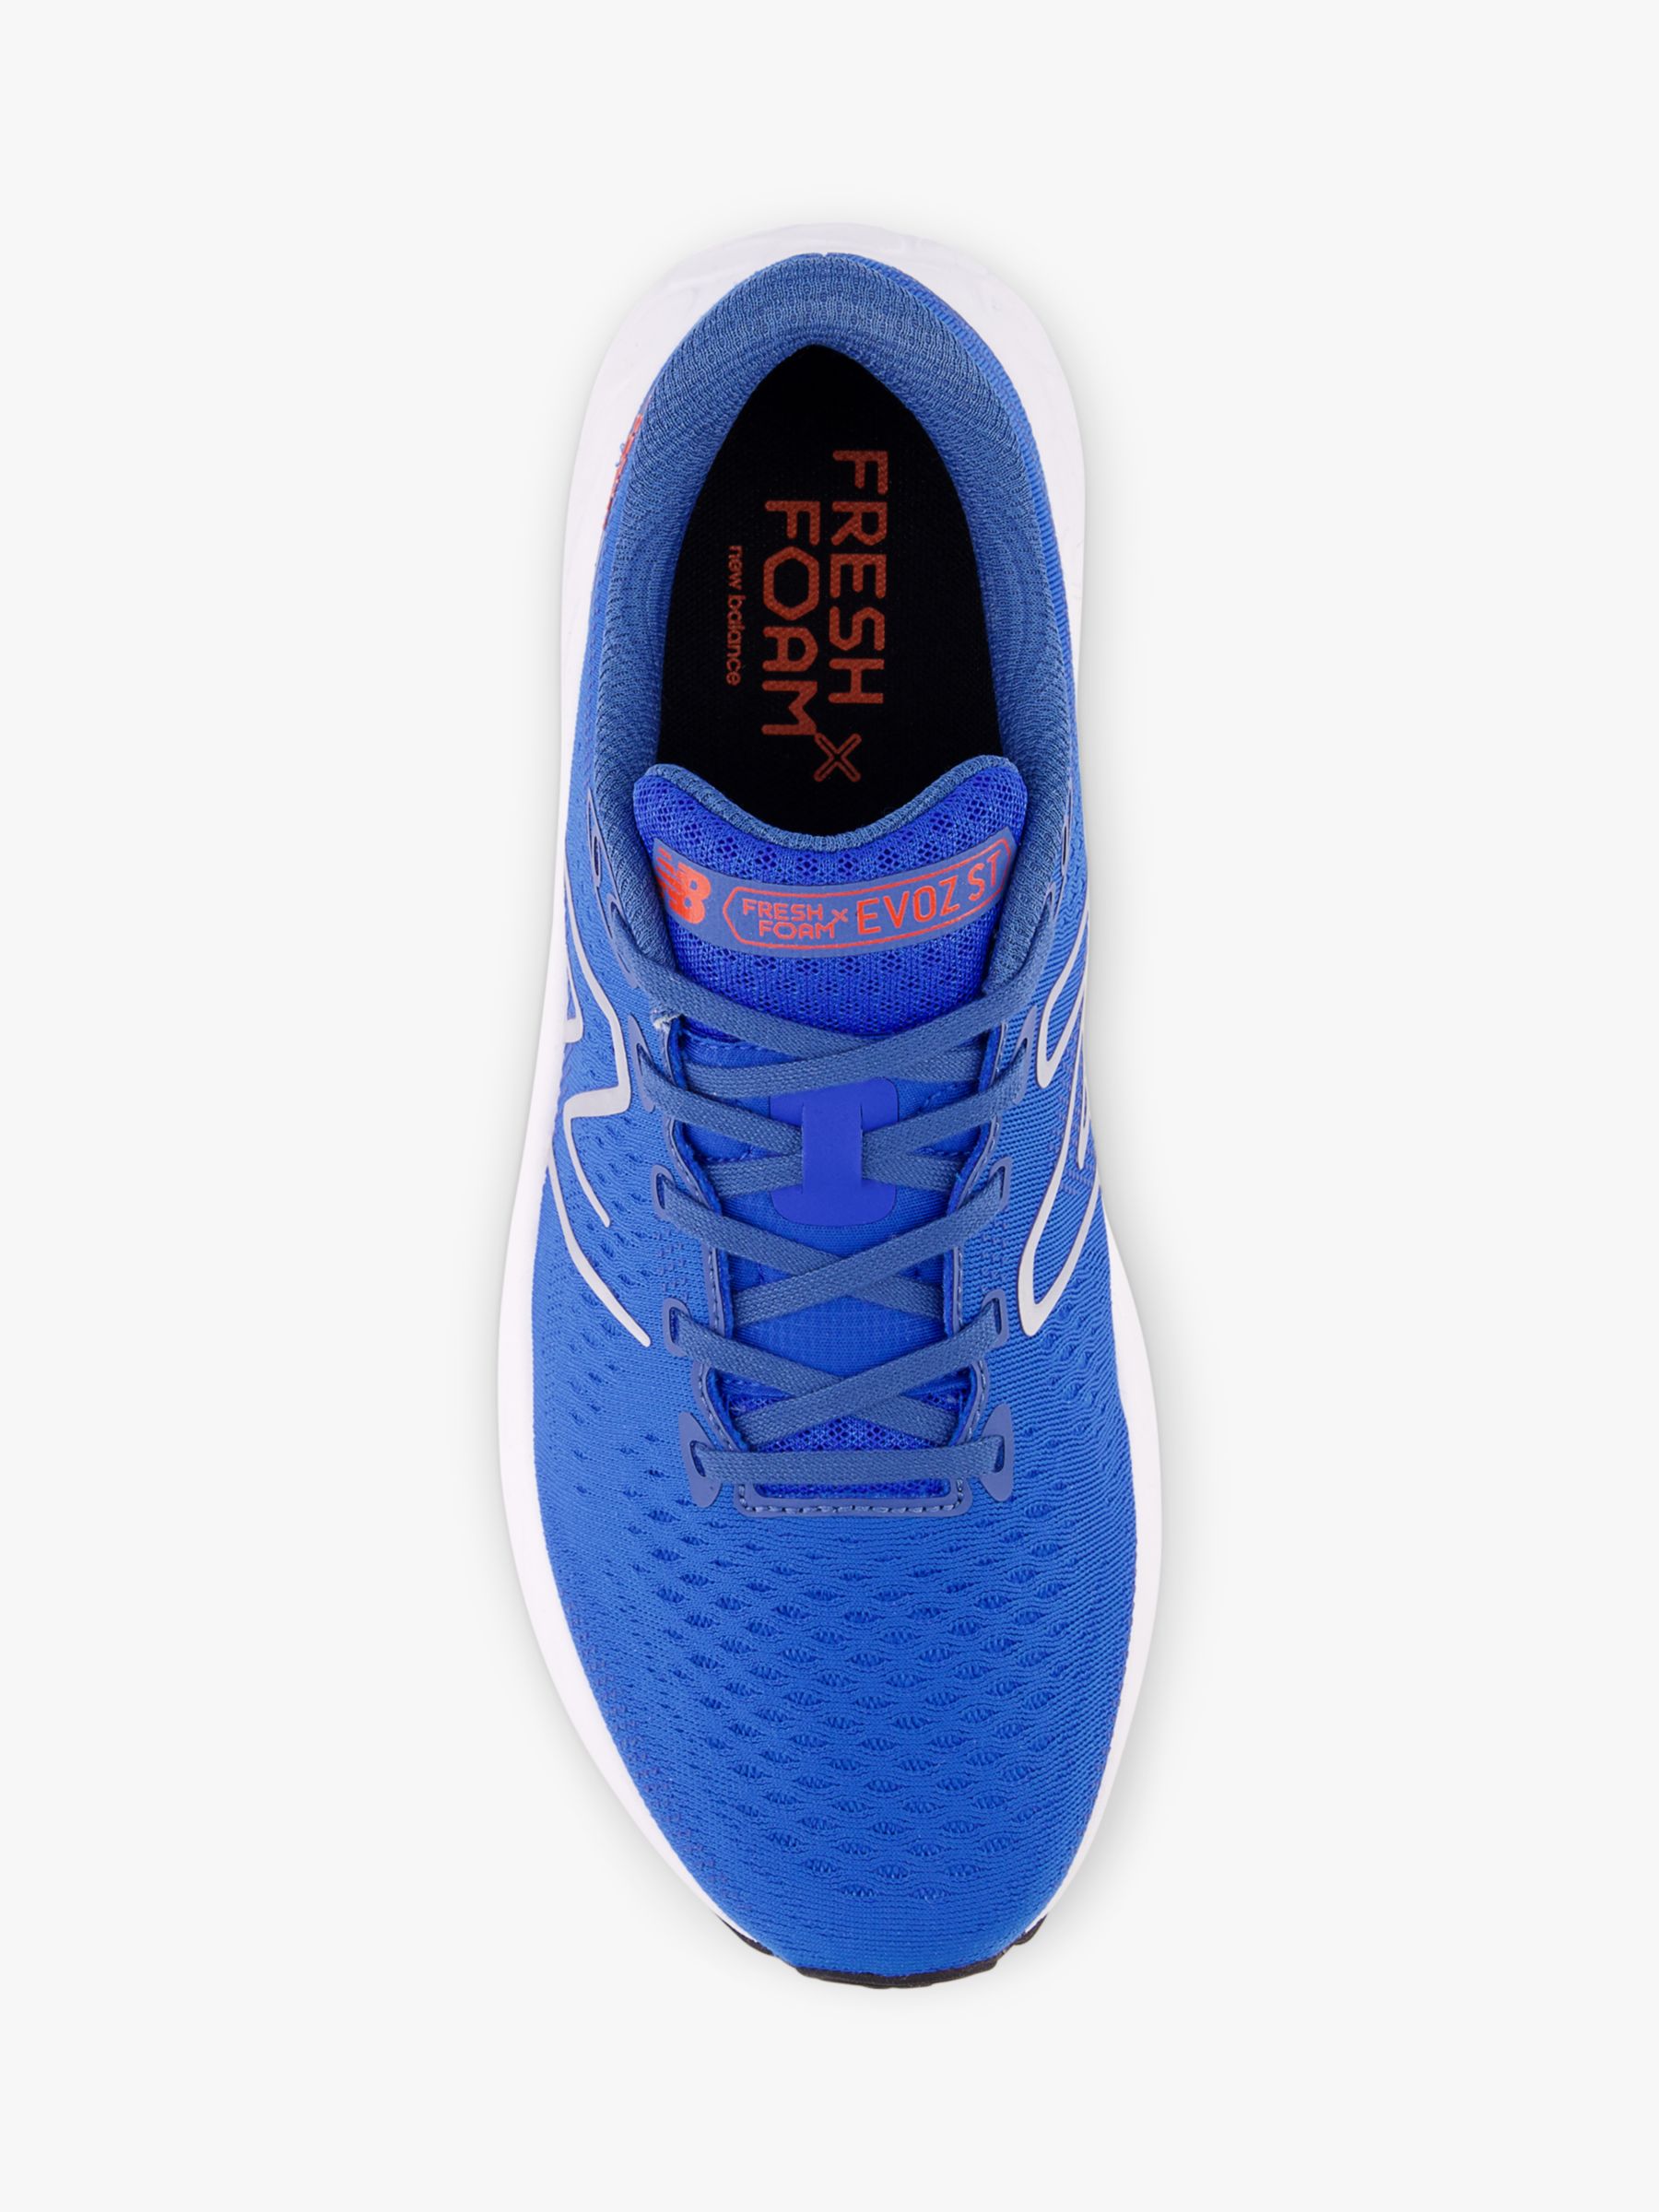 New Balance Fresh Foam X Evoz ST Men's Running Shoes, Blue Oasis 424, 10